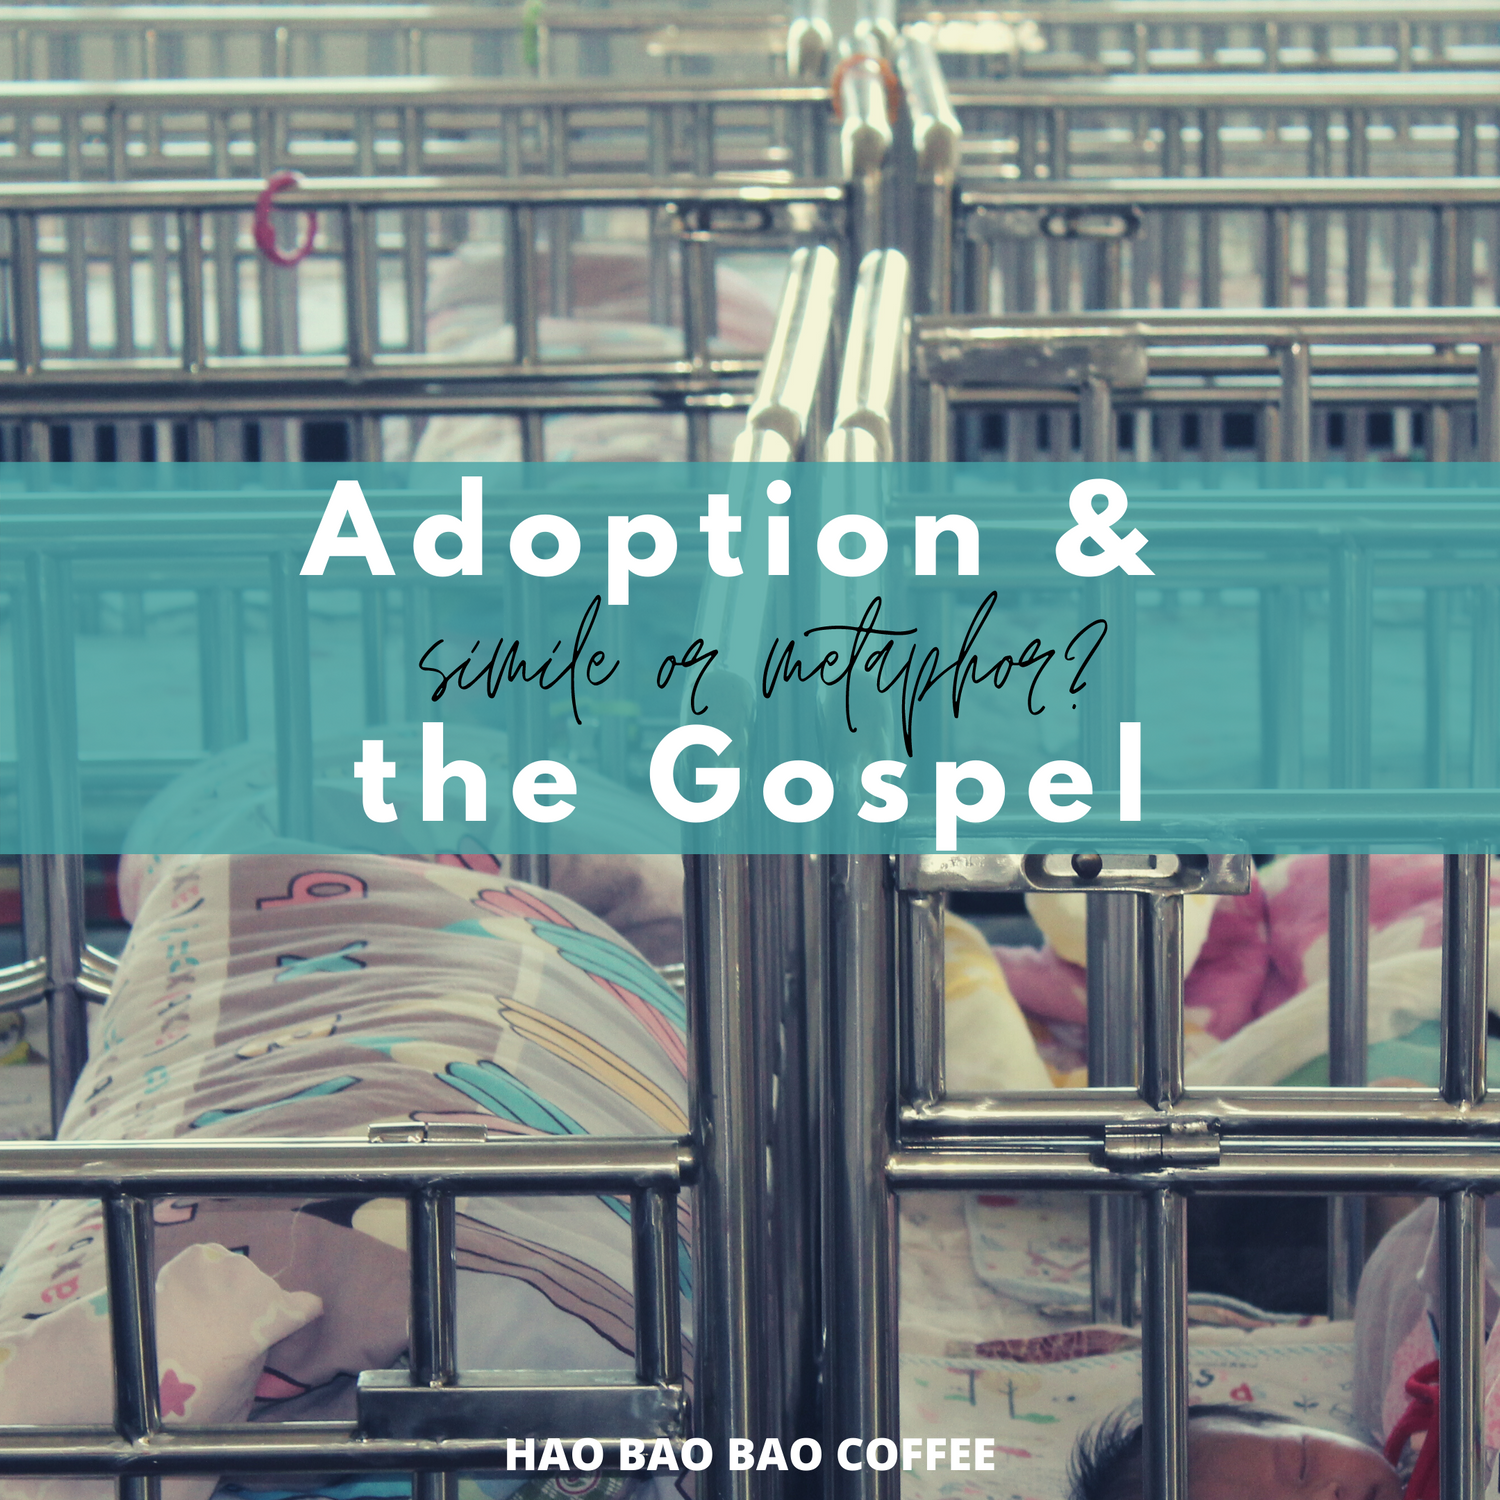 Adoption & the Gospel: Simile or Metaphor?